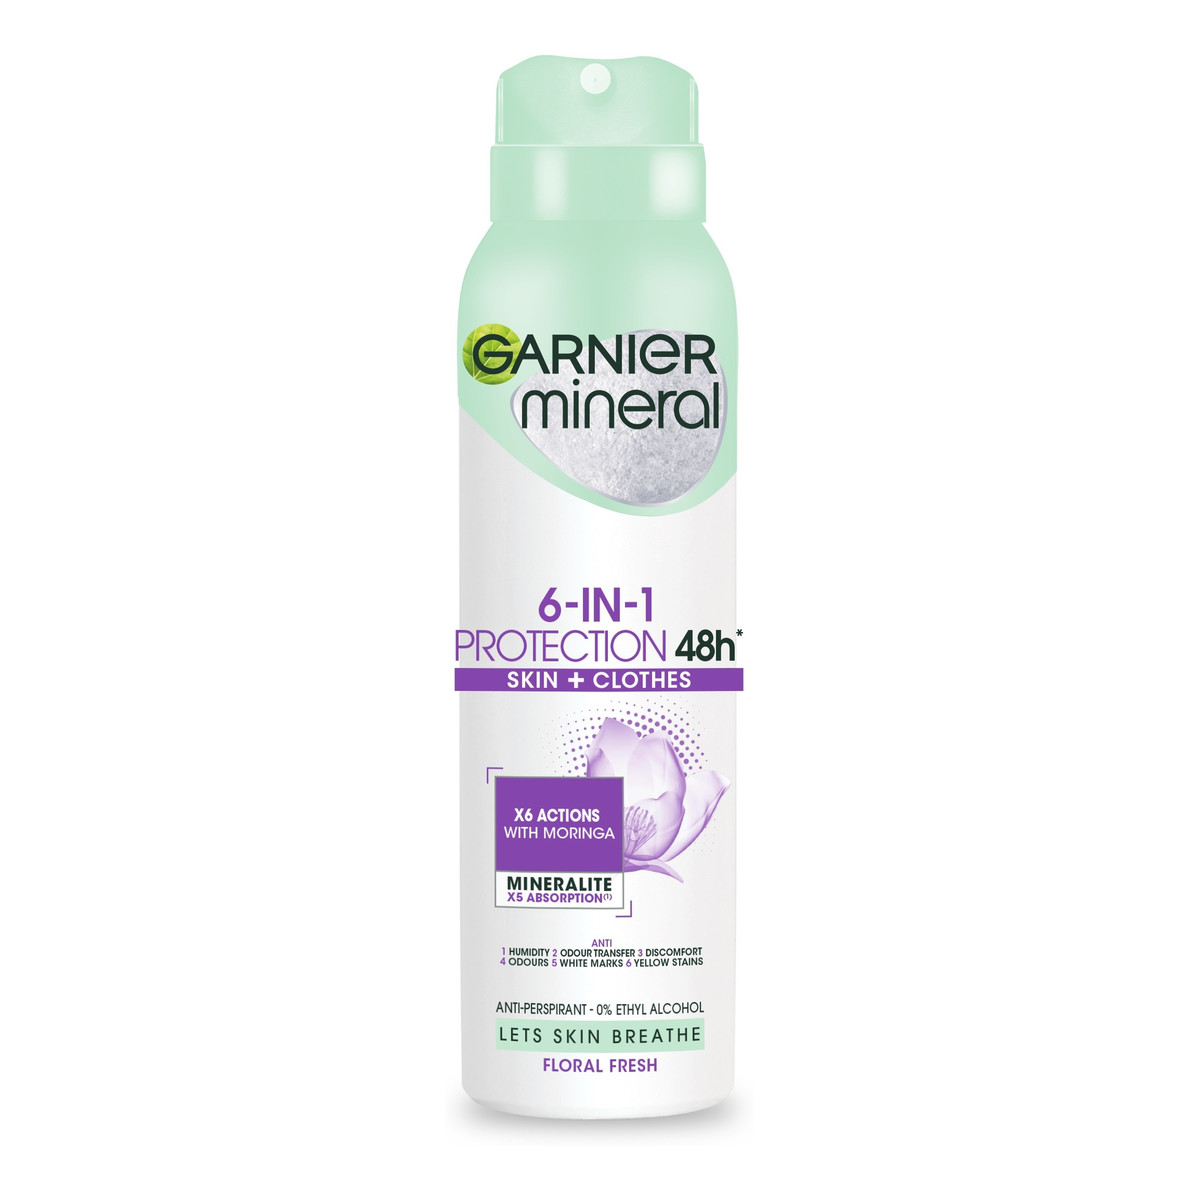 Garnier Mineral Dezodorant spray 6in1 Protection 48h Floral Fresh - Skin+Clothes 150ml